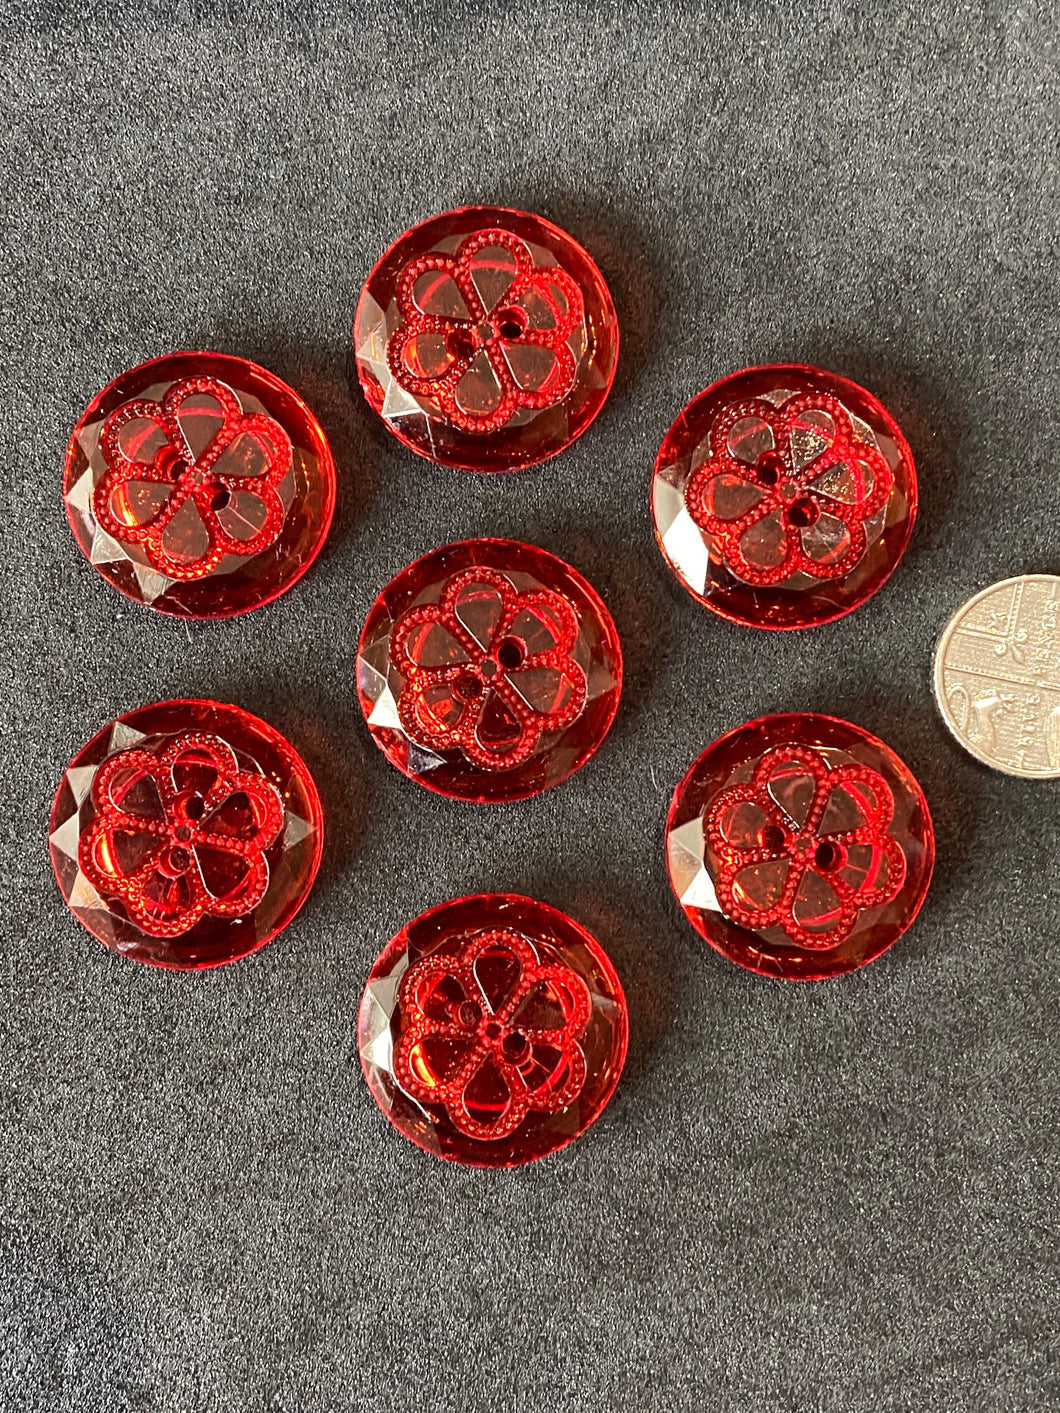 fabric shack haberdashery sewing dressmaking buttons 2 hole flower wheel translucent 22.5 red